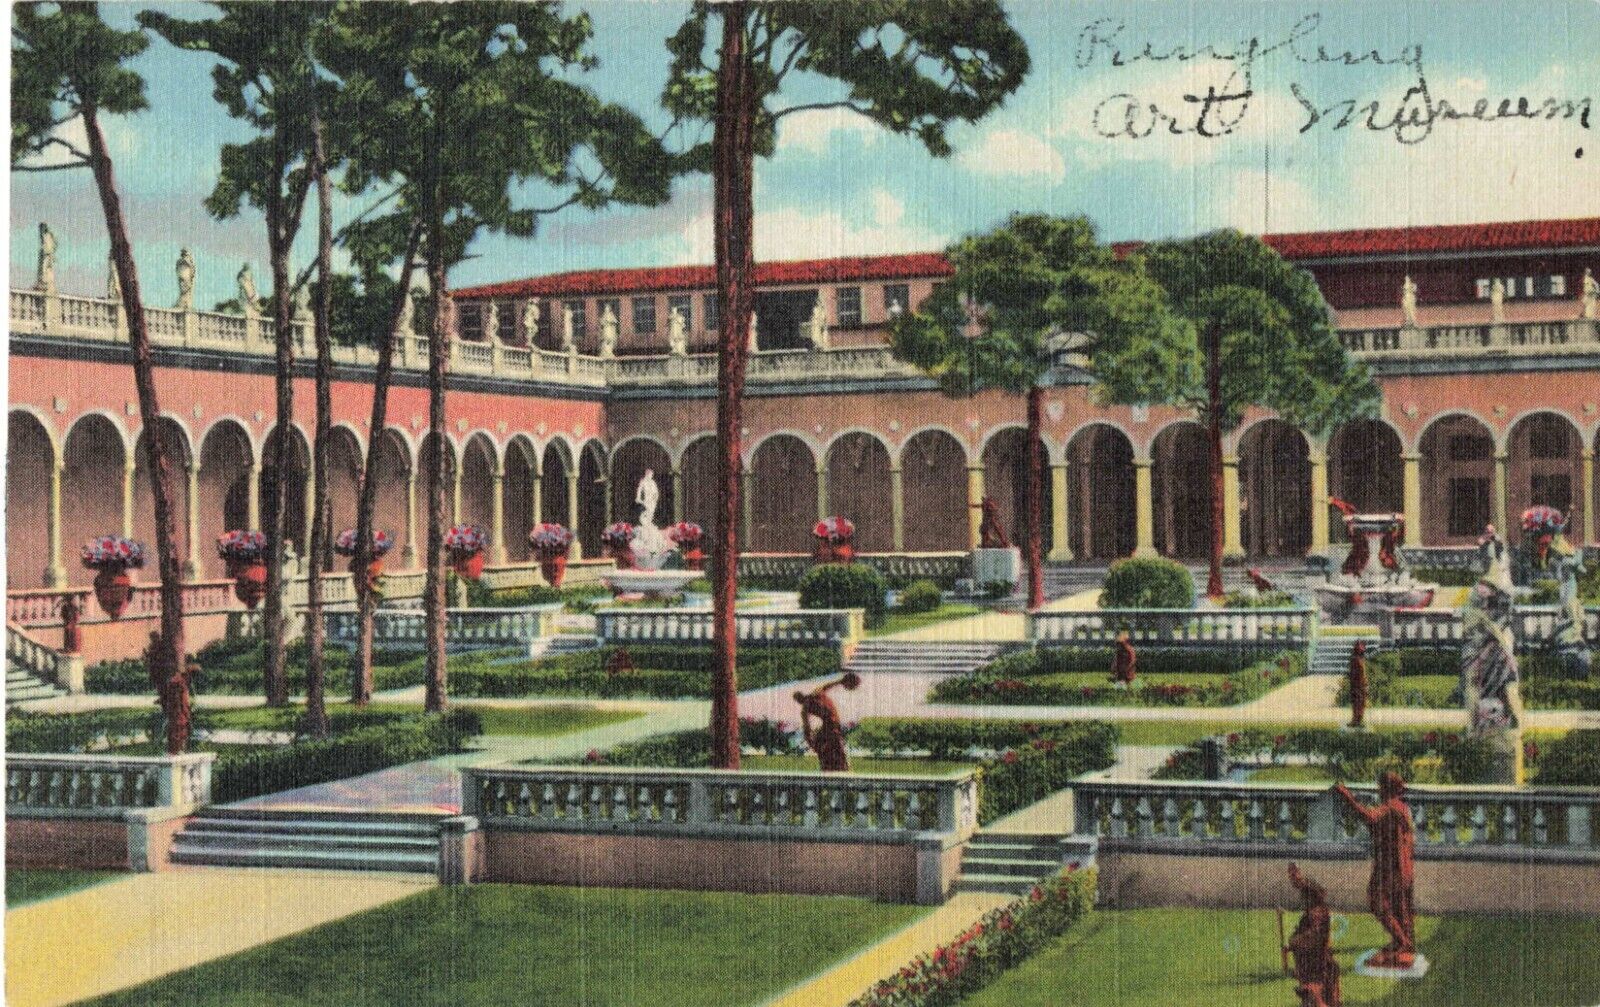 Sarasota Florida, Ringling Art Museum Courtyard Gardens, Vintage Postcard